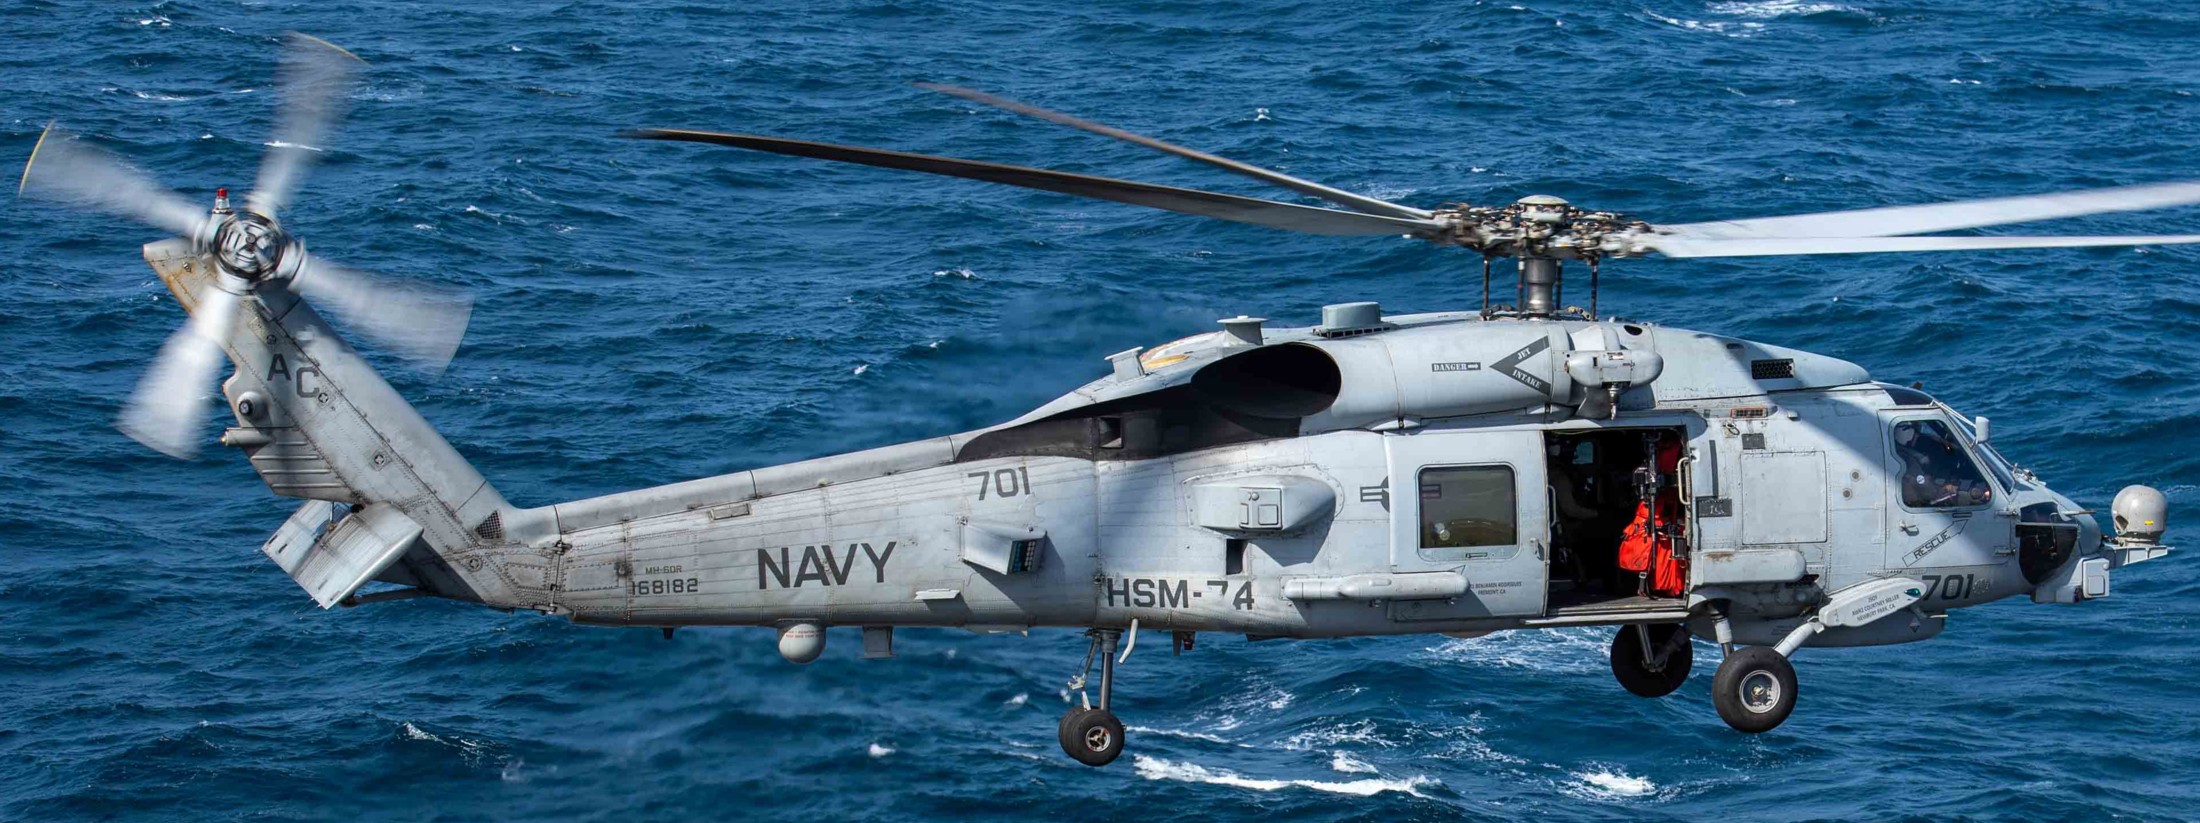 hsm-74 swamp foxes helicopter maritime strike squadron mh-60r seahawk cvw-3 cvn-69 uss dwight d. eisenhower 123